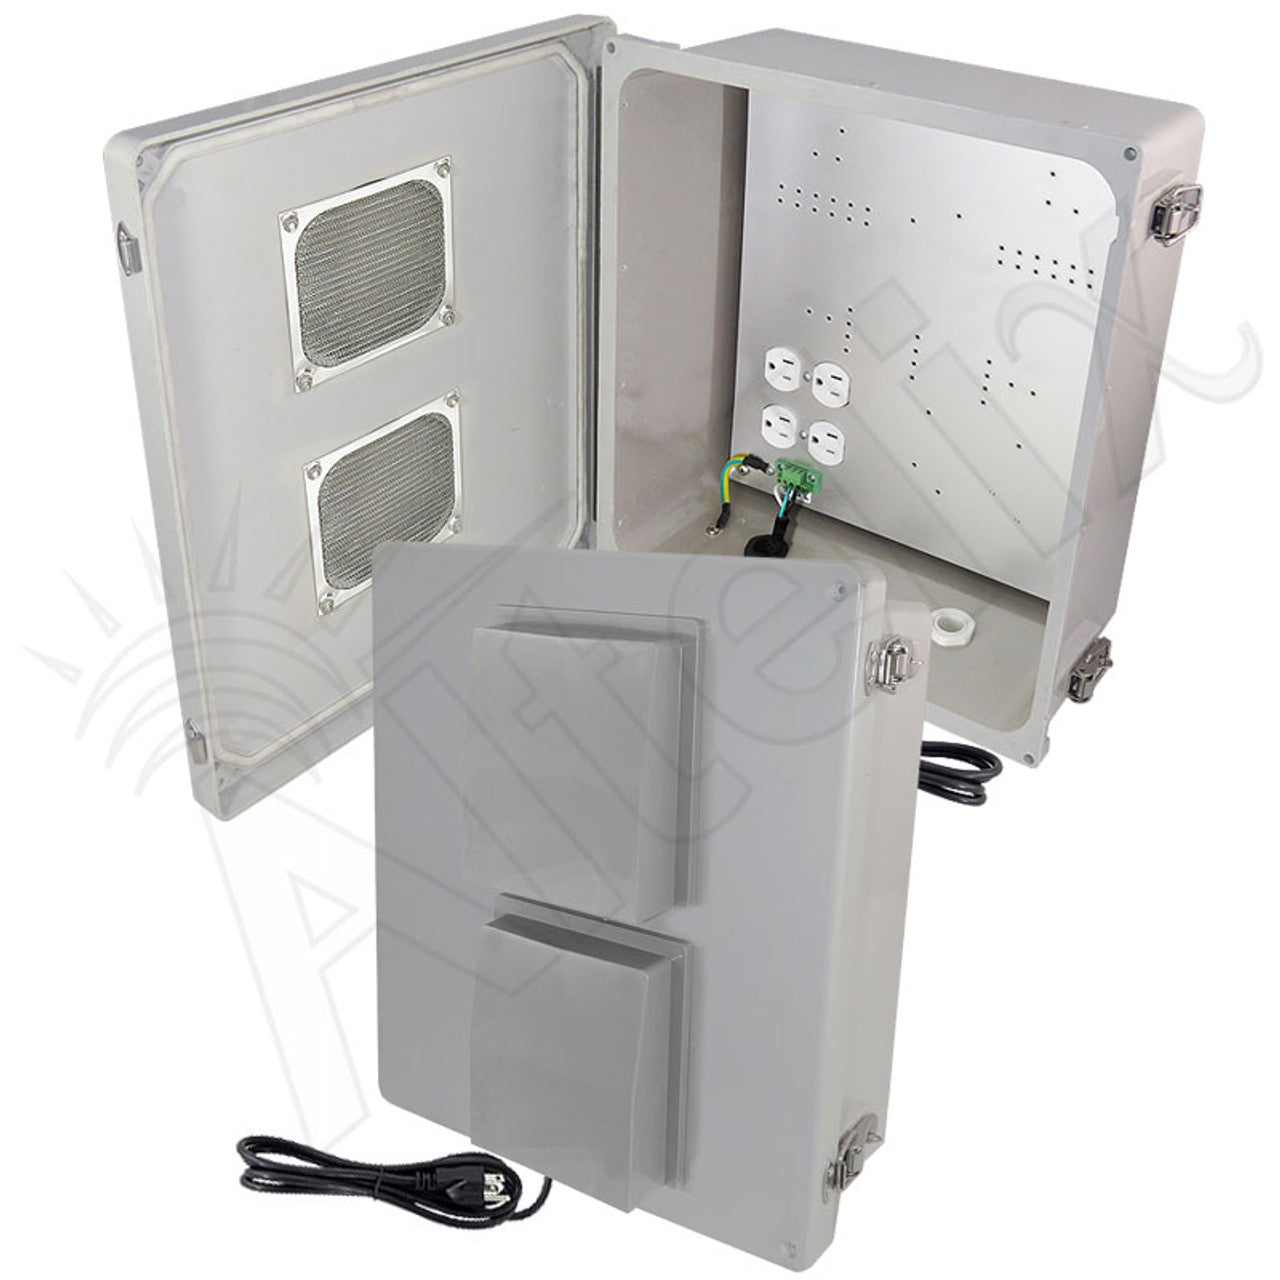 Altelix Vented Fiberglass Weatherproof NEMA Enclosure with 120 VAC Outlets and Power Cord-3